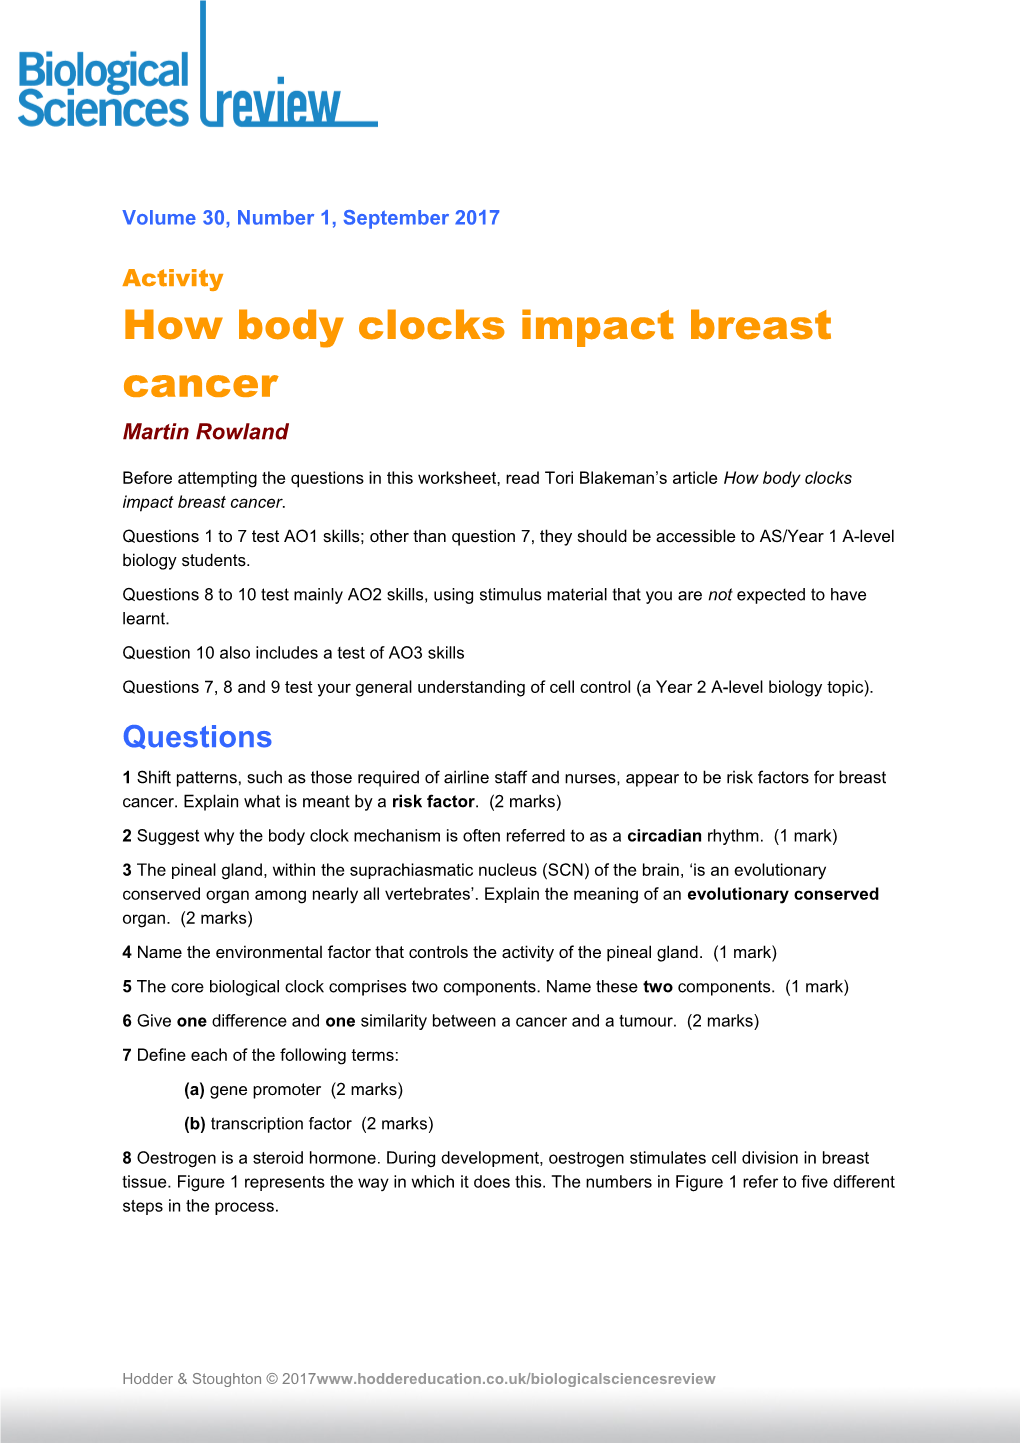 How Body Clocks Impact Breast Cancer